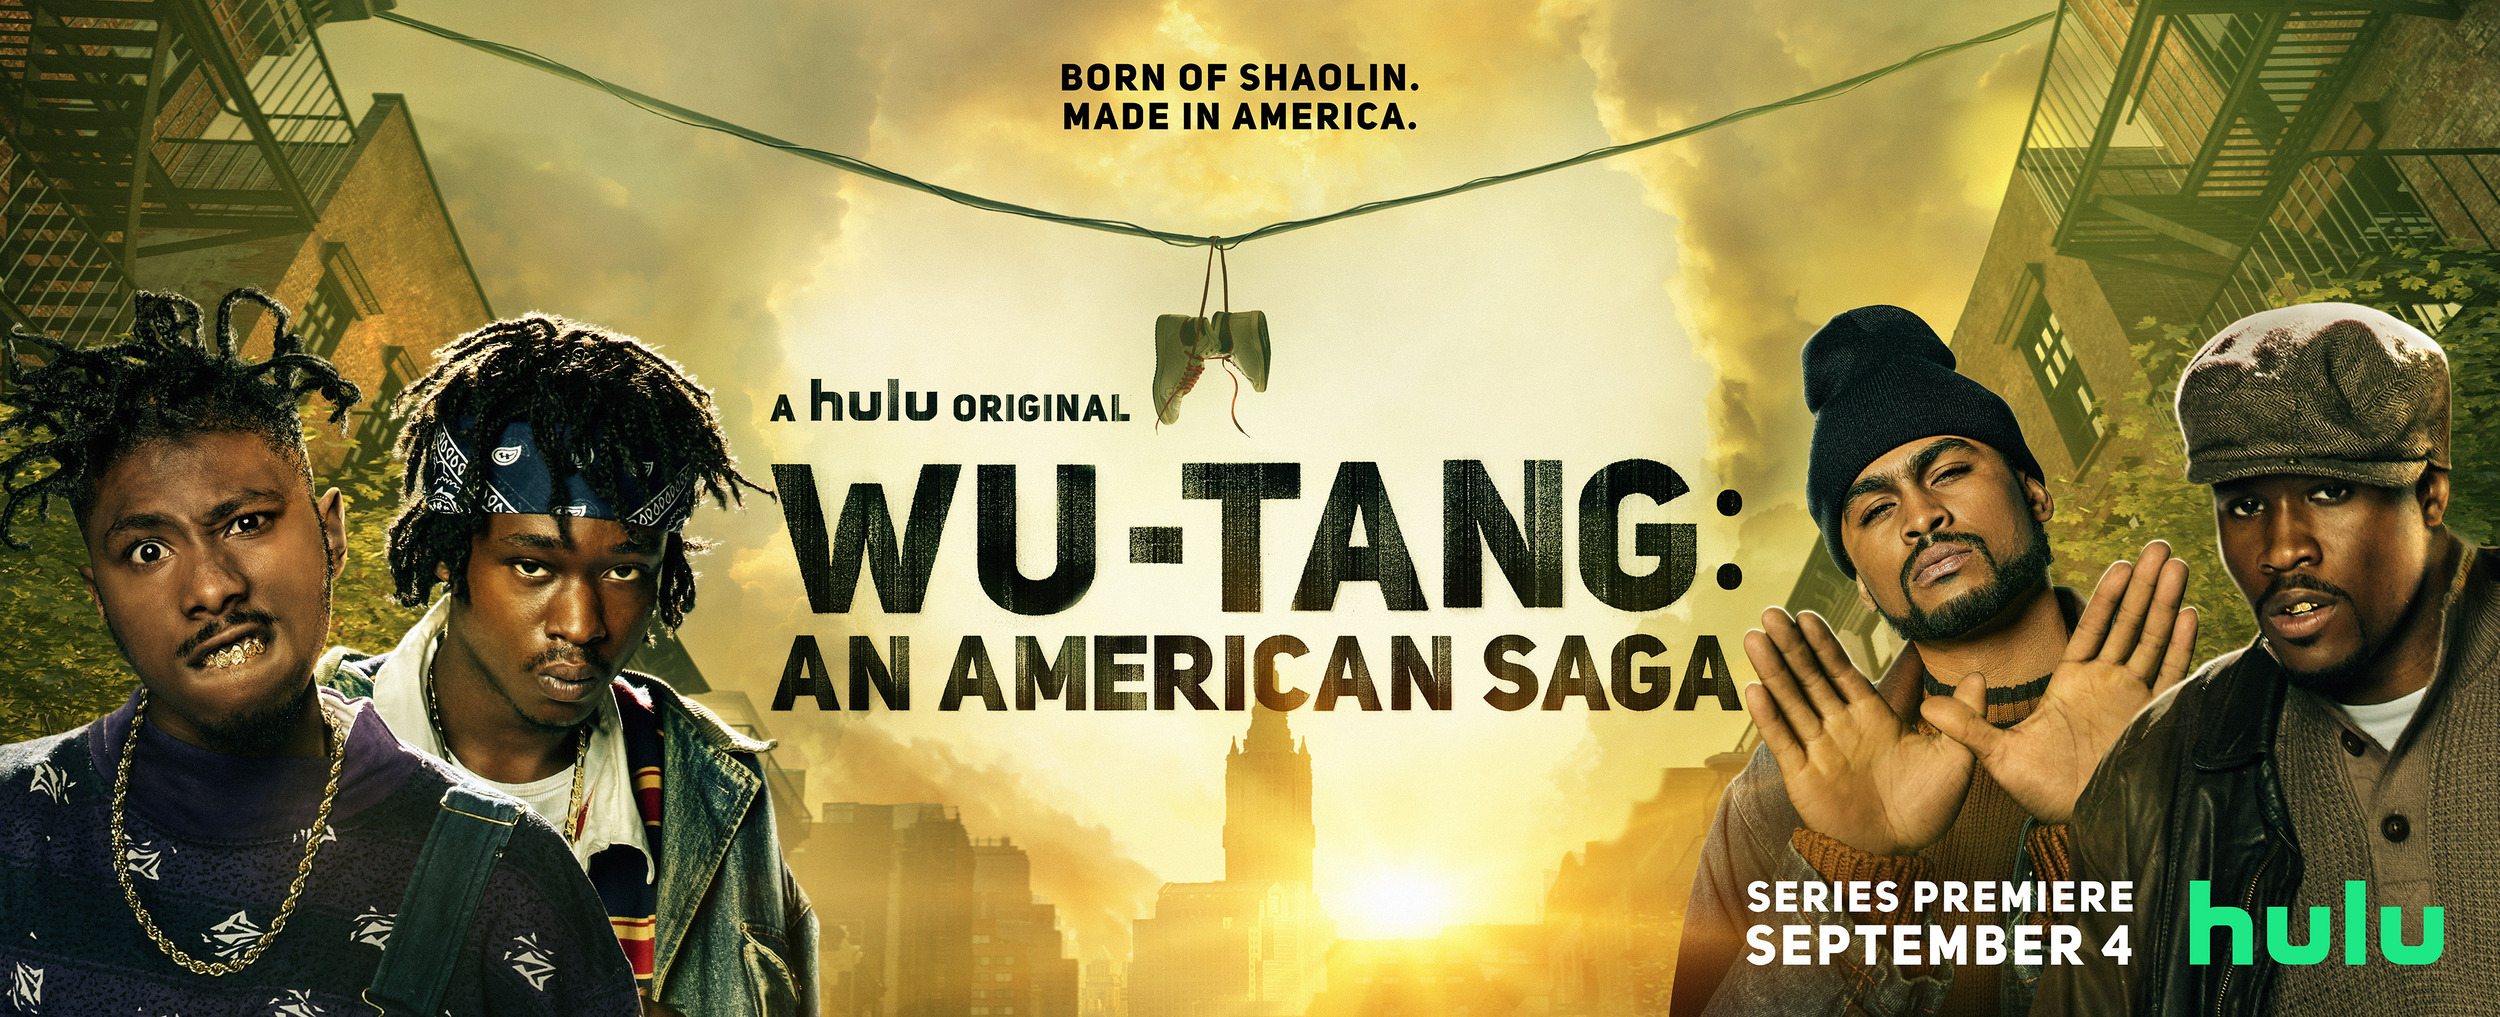 Mega Sized TV Poster Image for Wu-Tang: An American Saga (#9 of 22)